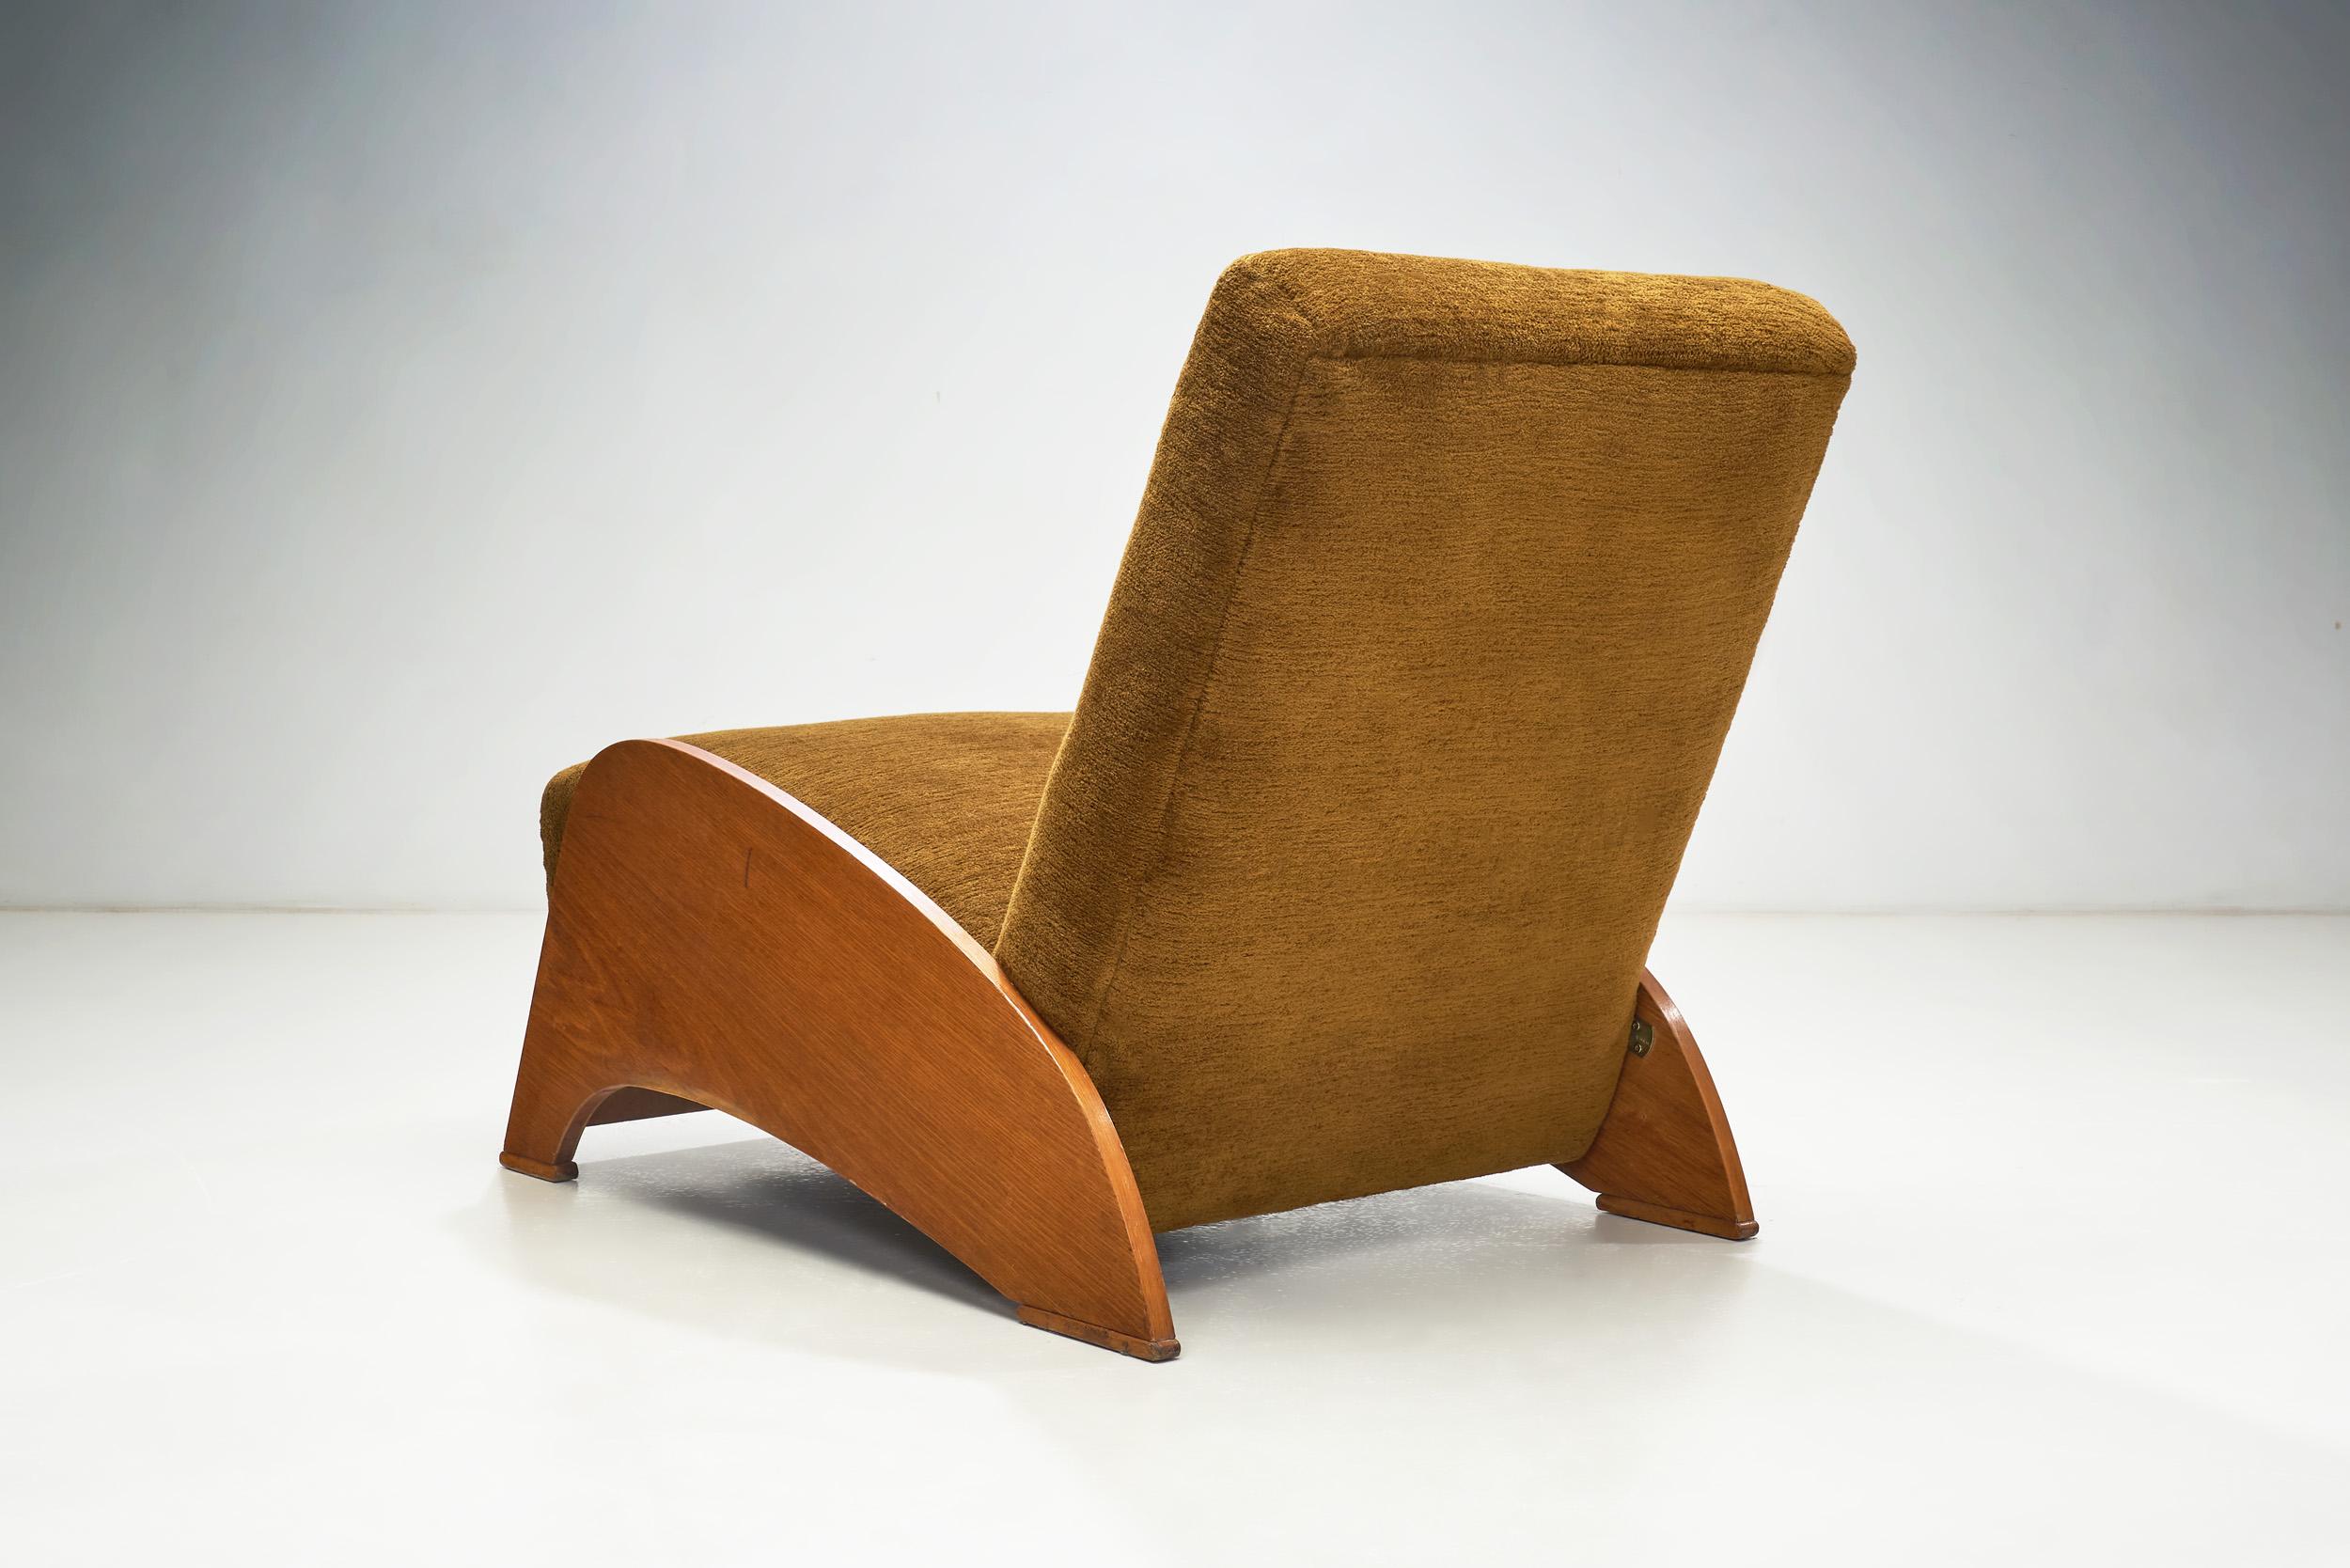 Sculptural European Modern Oak Lounge Chair, Europe 1960s For Sale 4